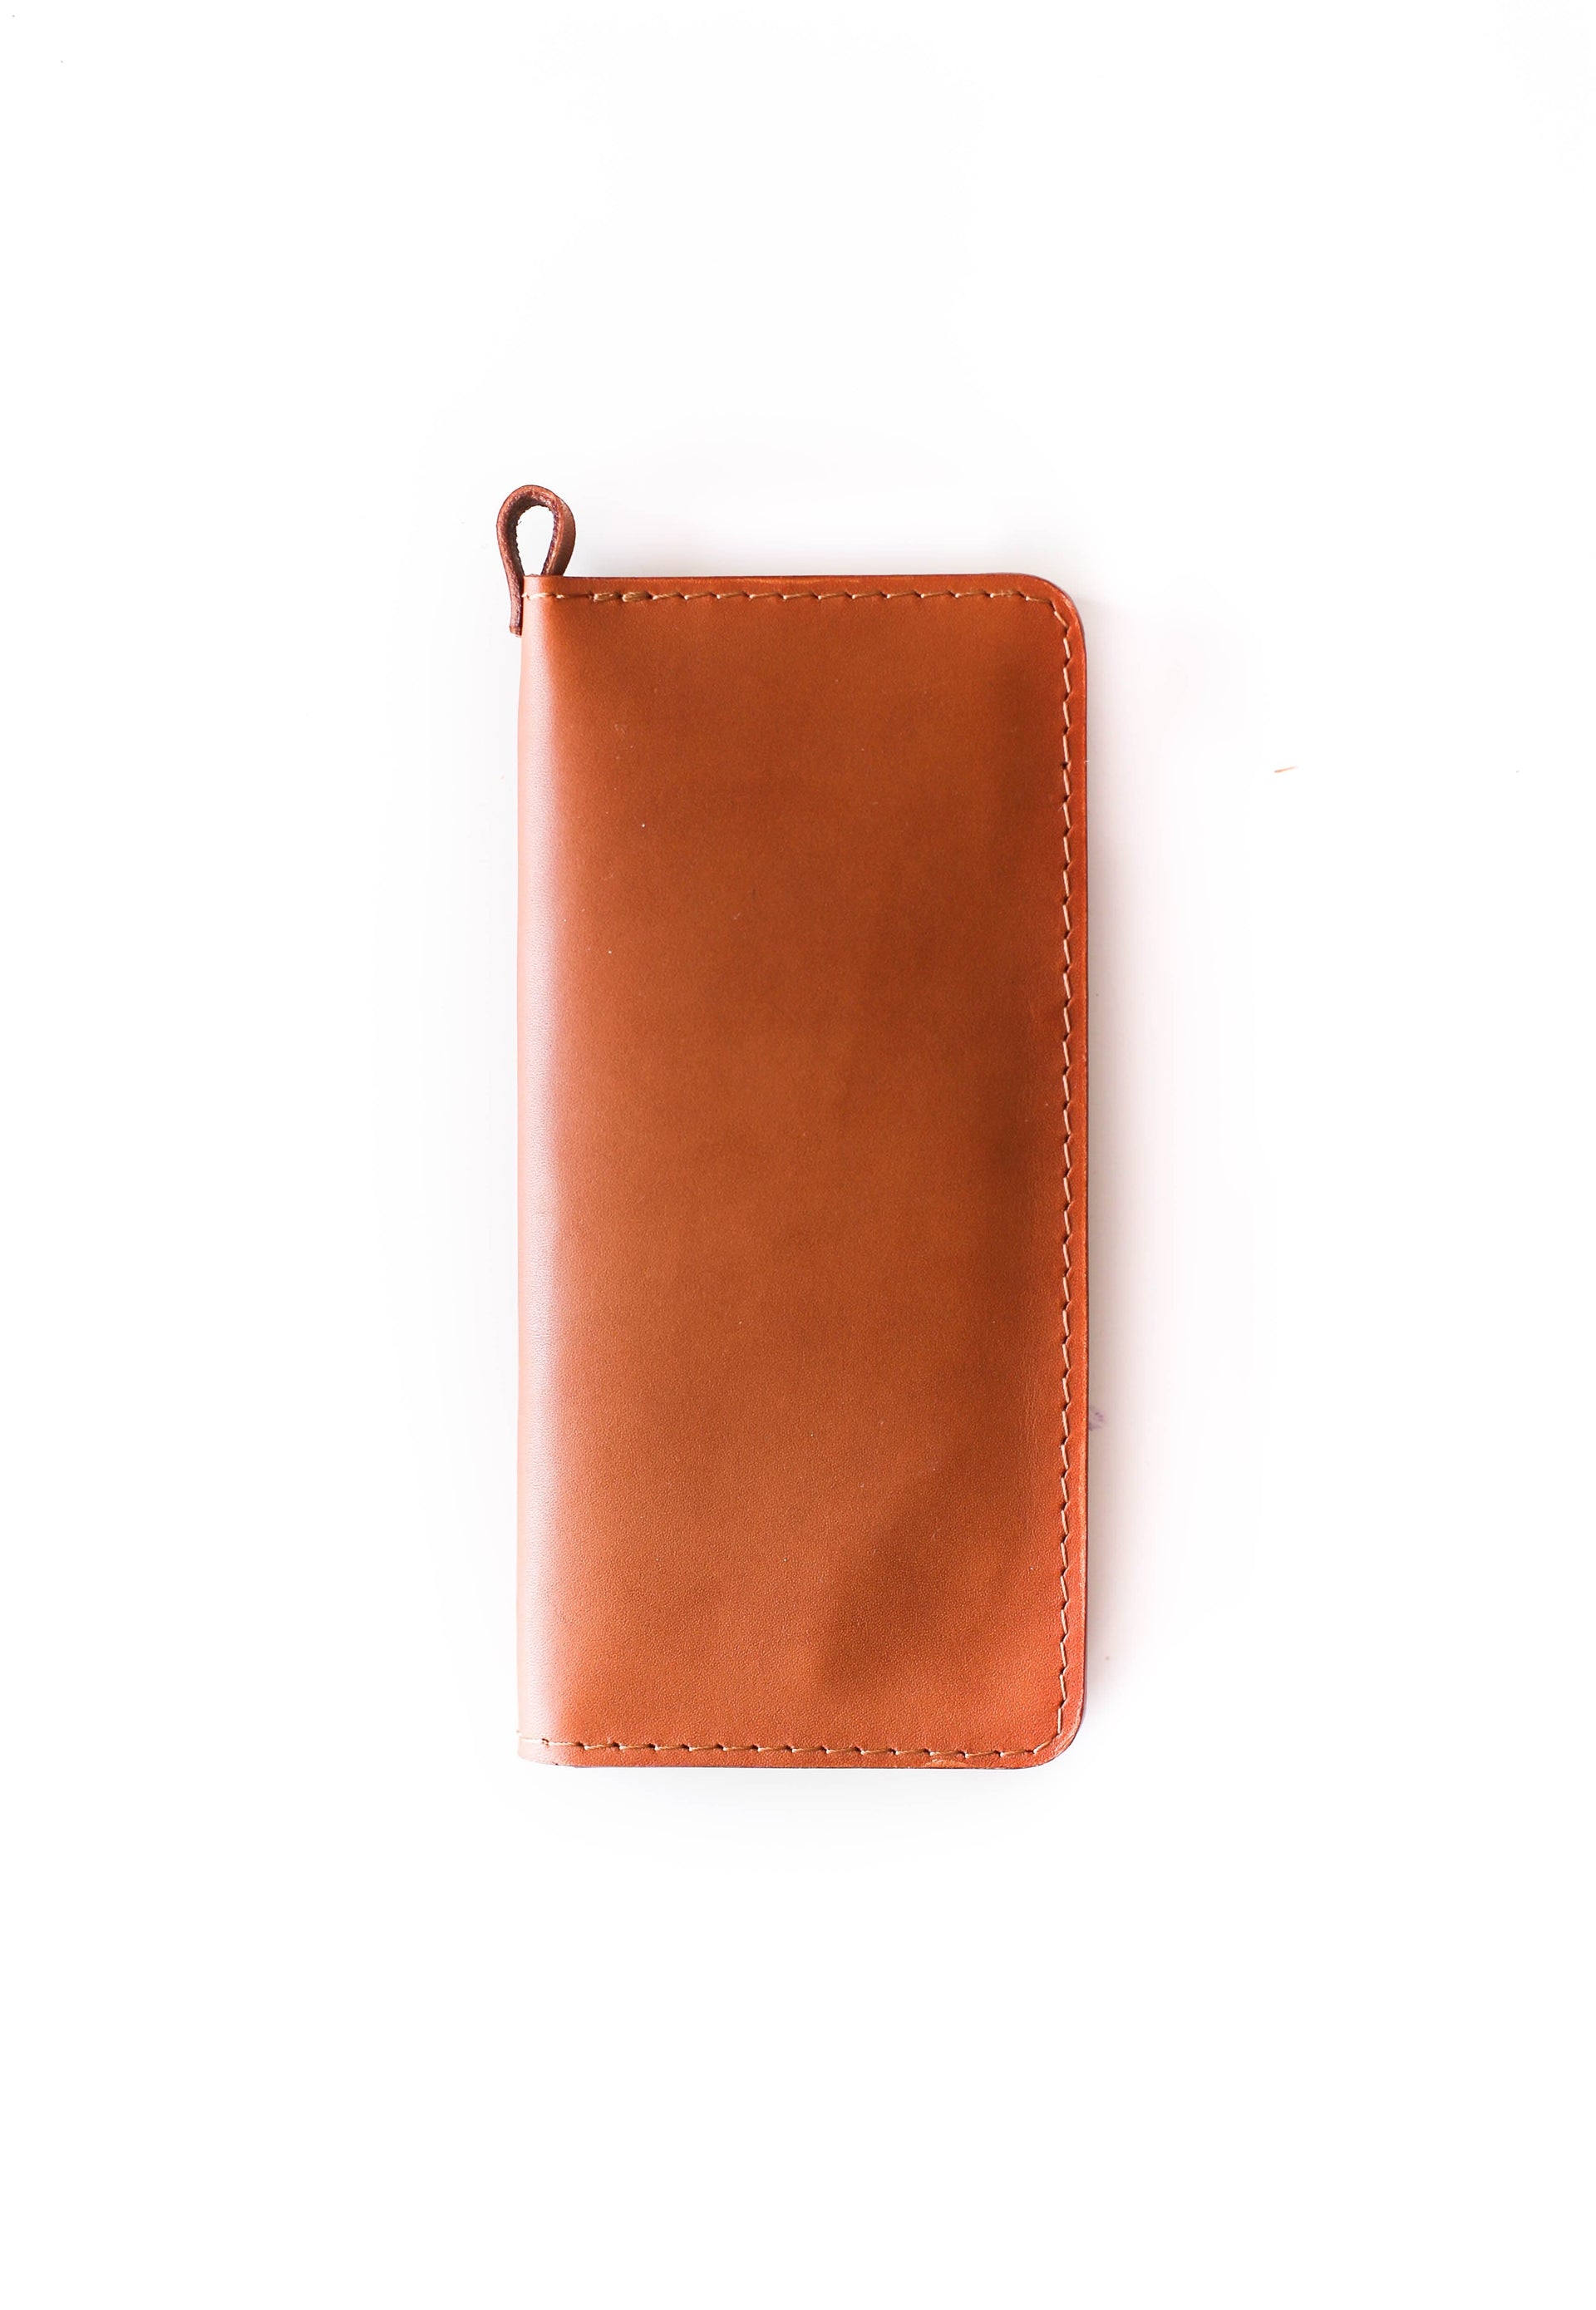 long leather wallets for men